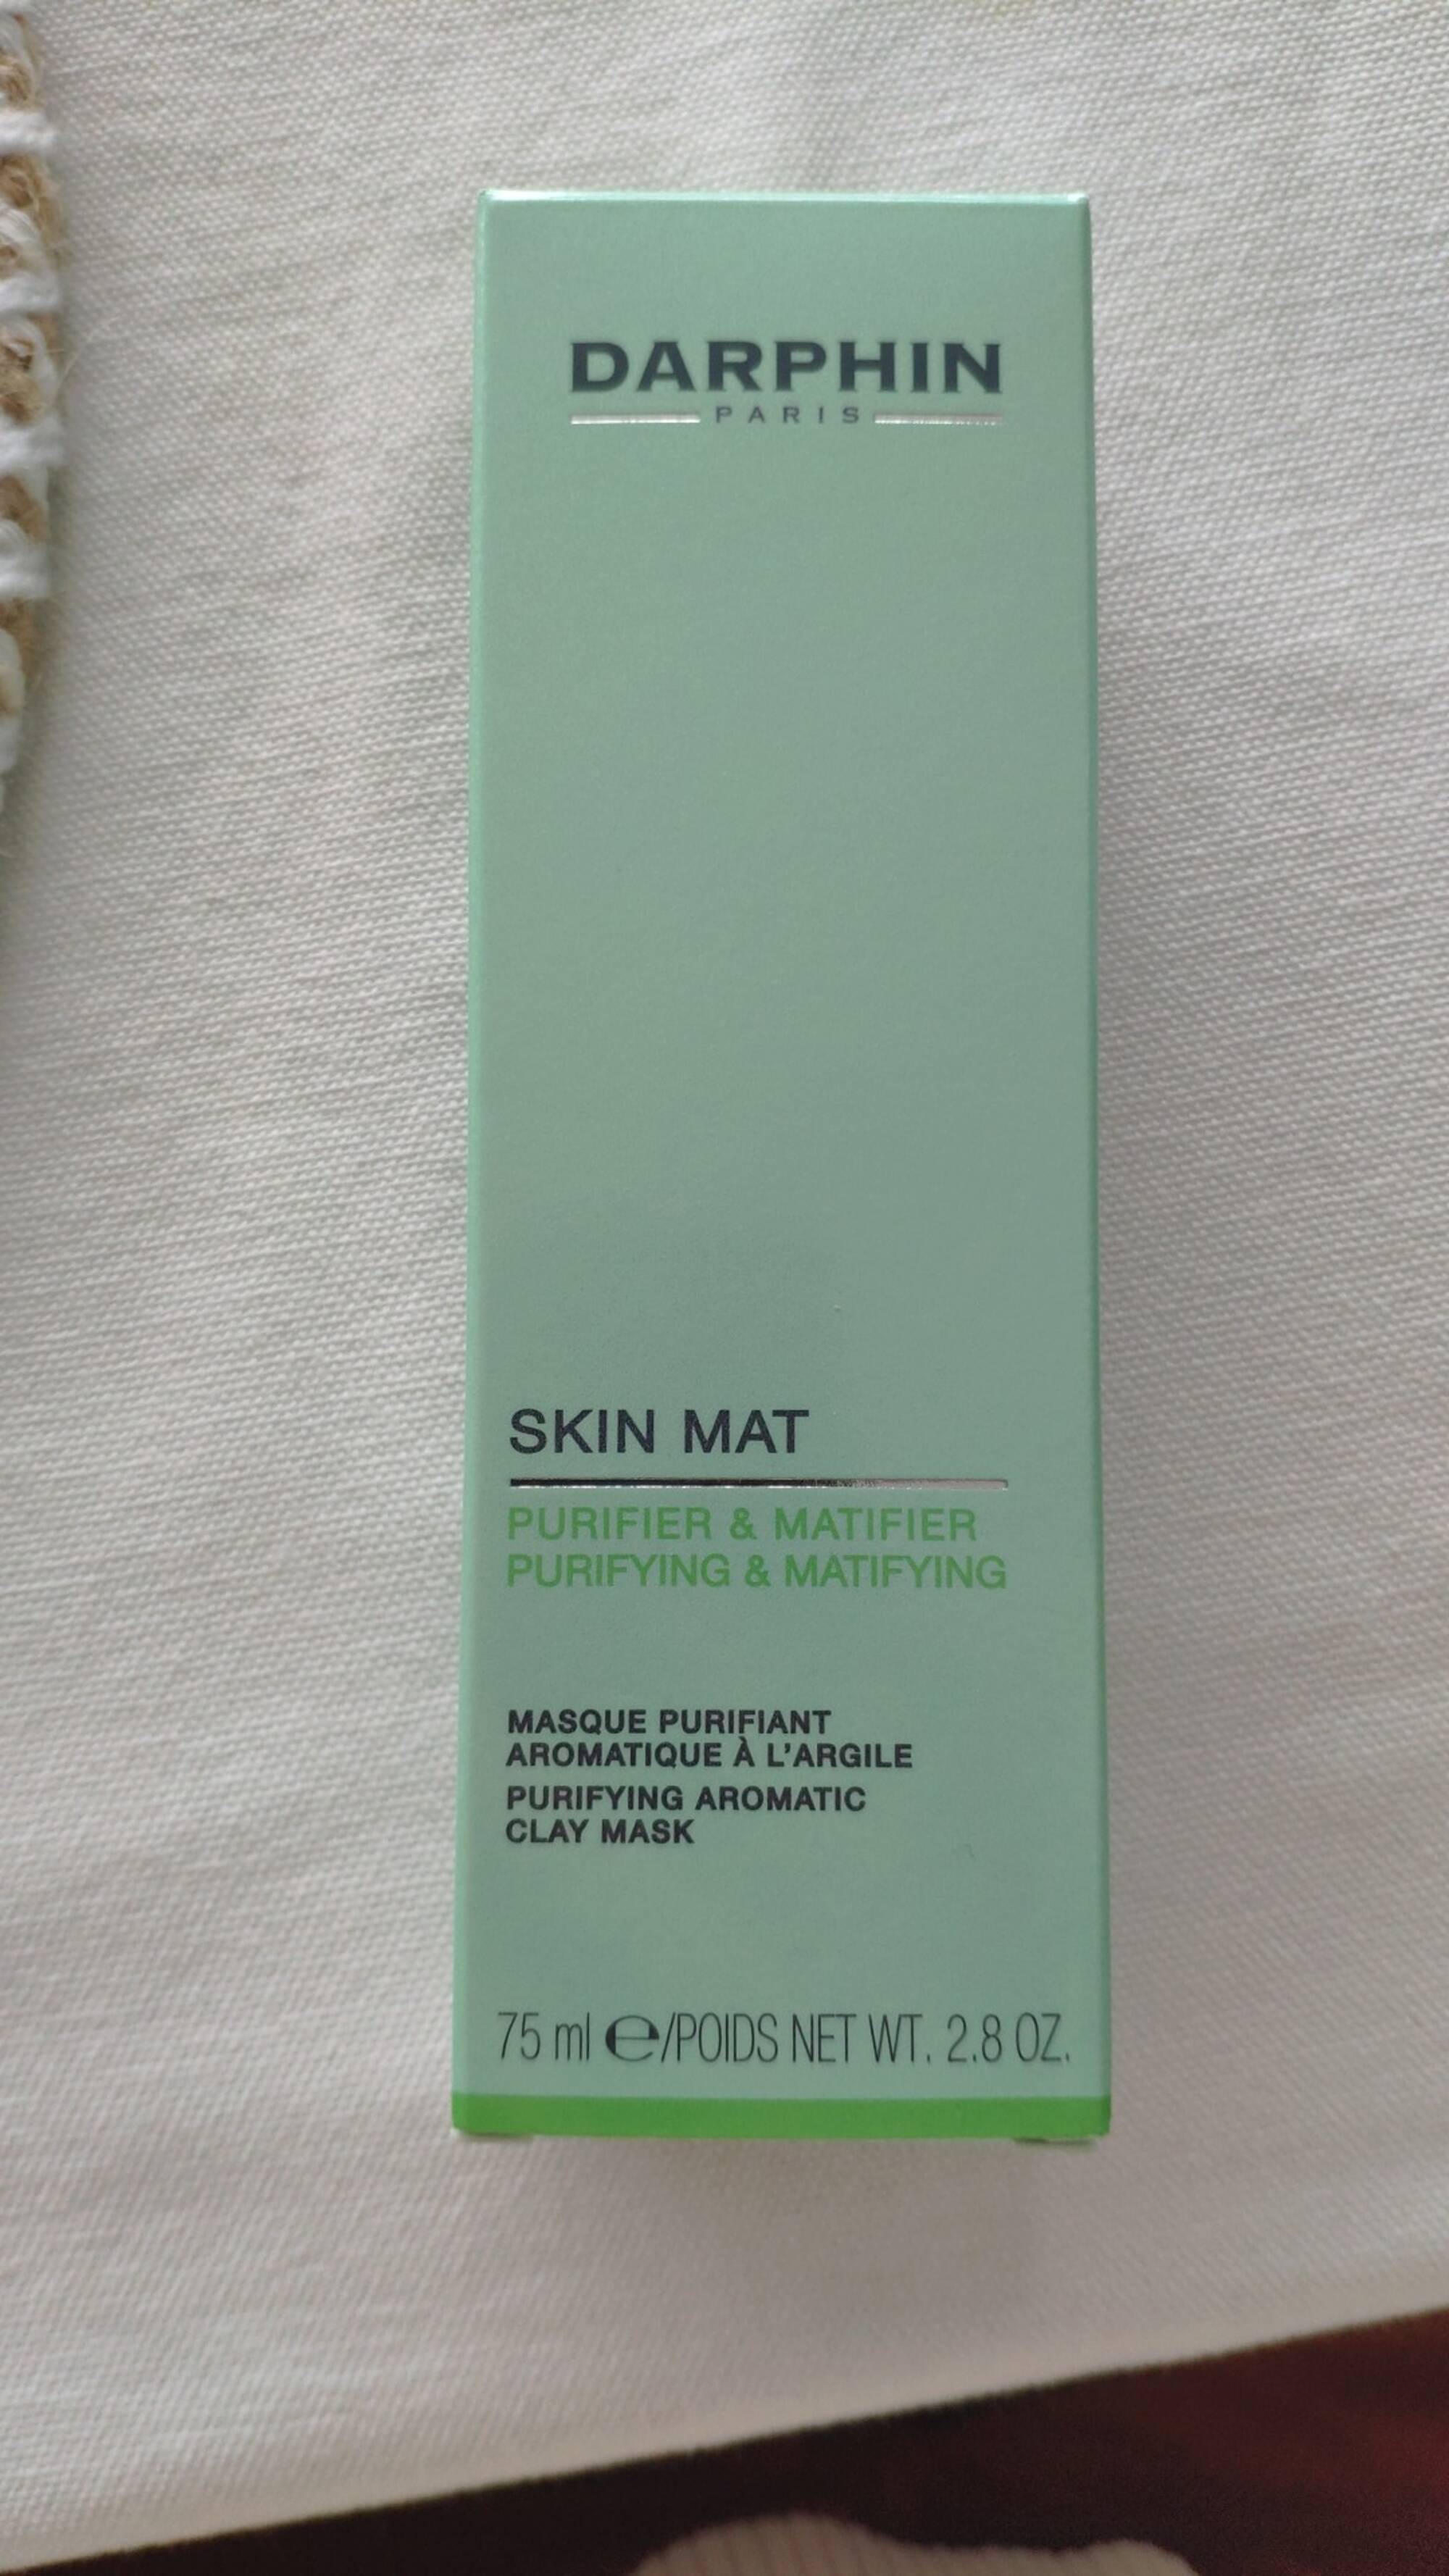 DARPHIN - Skin mat - Masque purifiant